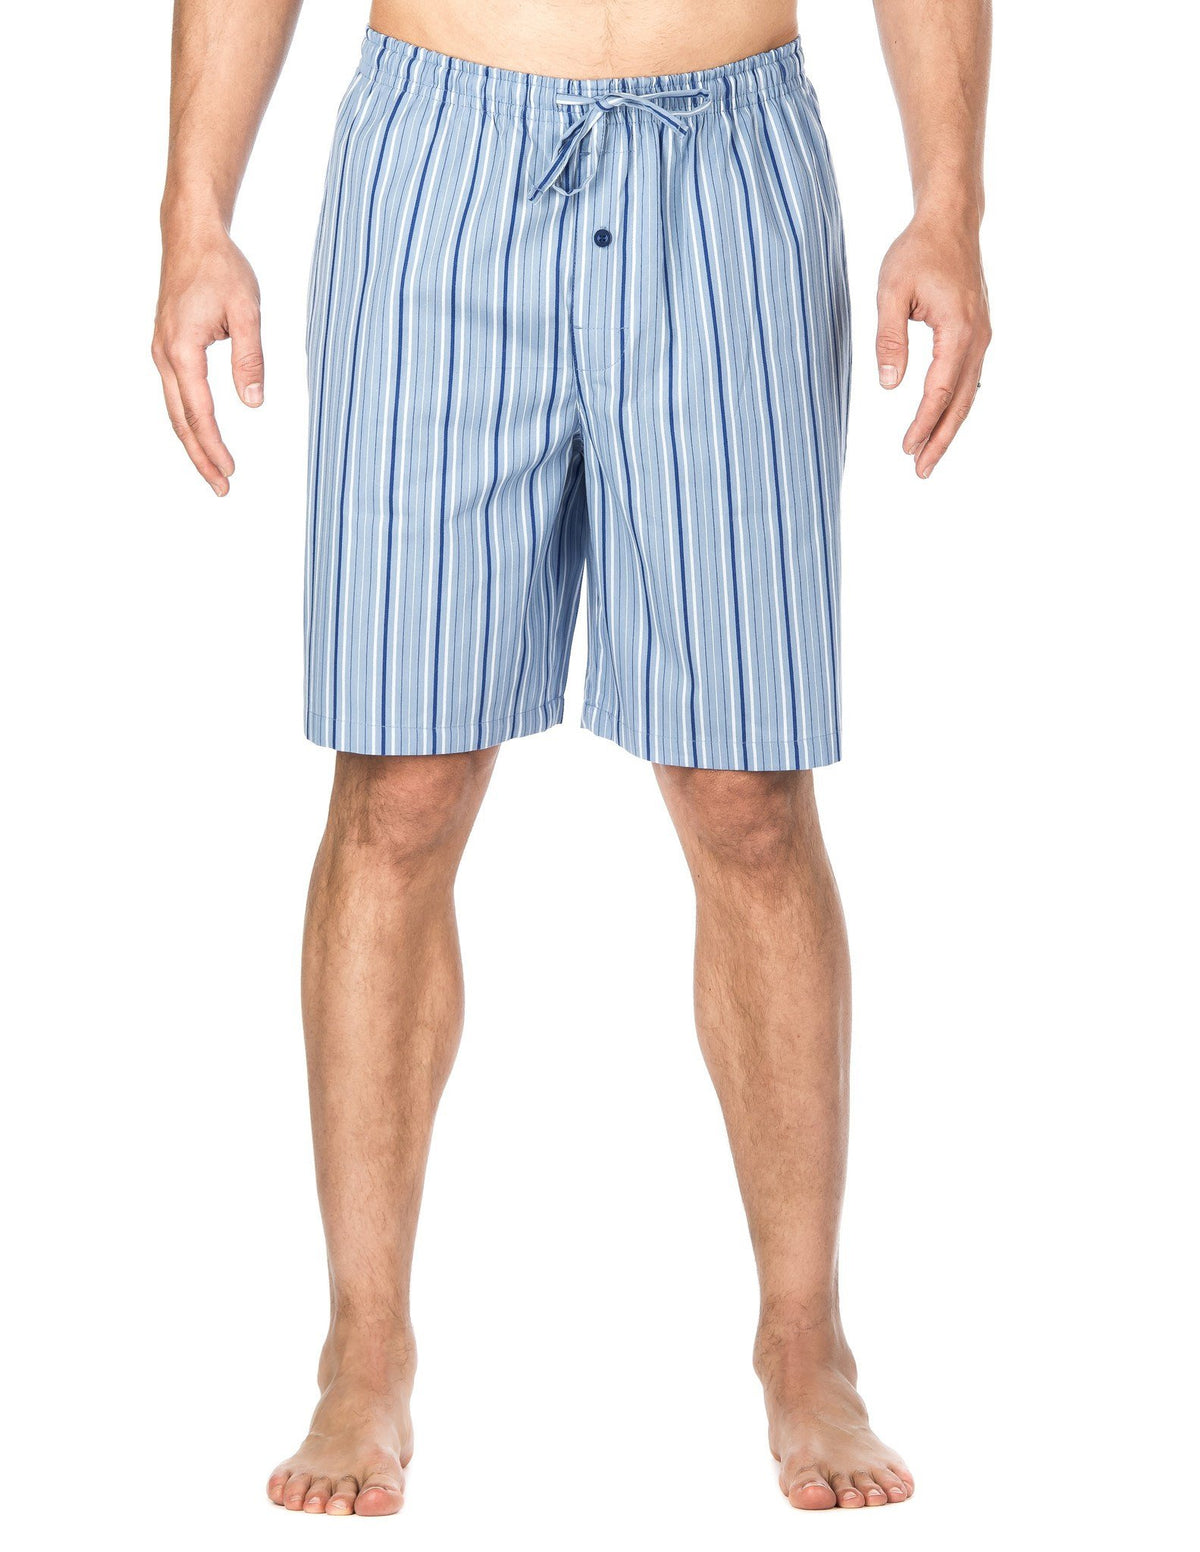 Men's Premium Cotton Lounge/Sleep Shorts - Stripes Light Blue